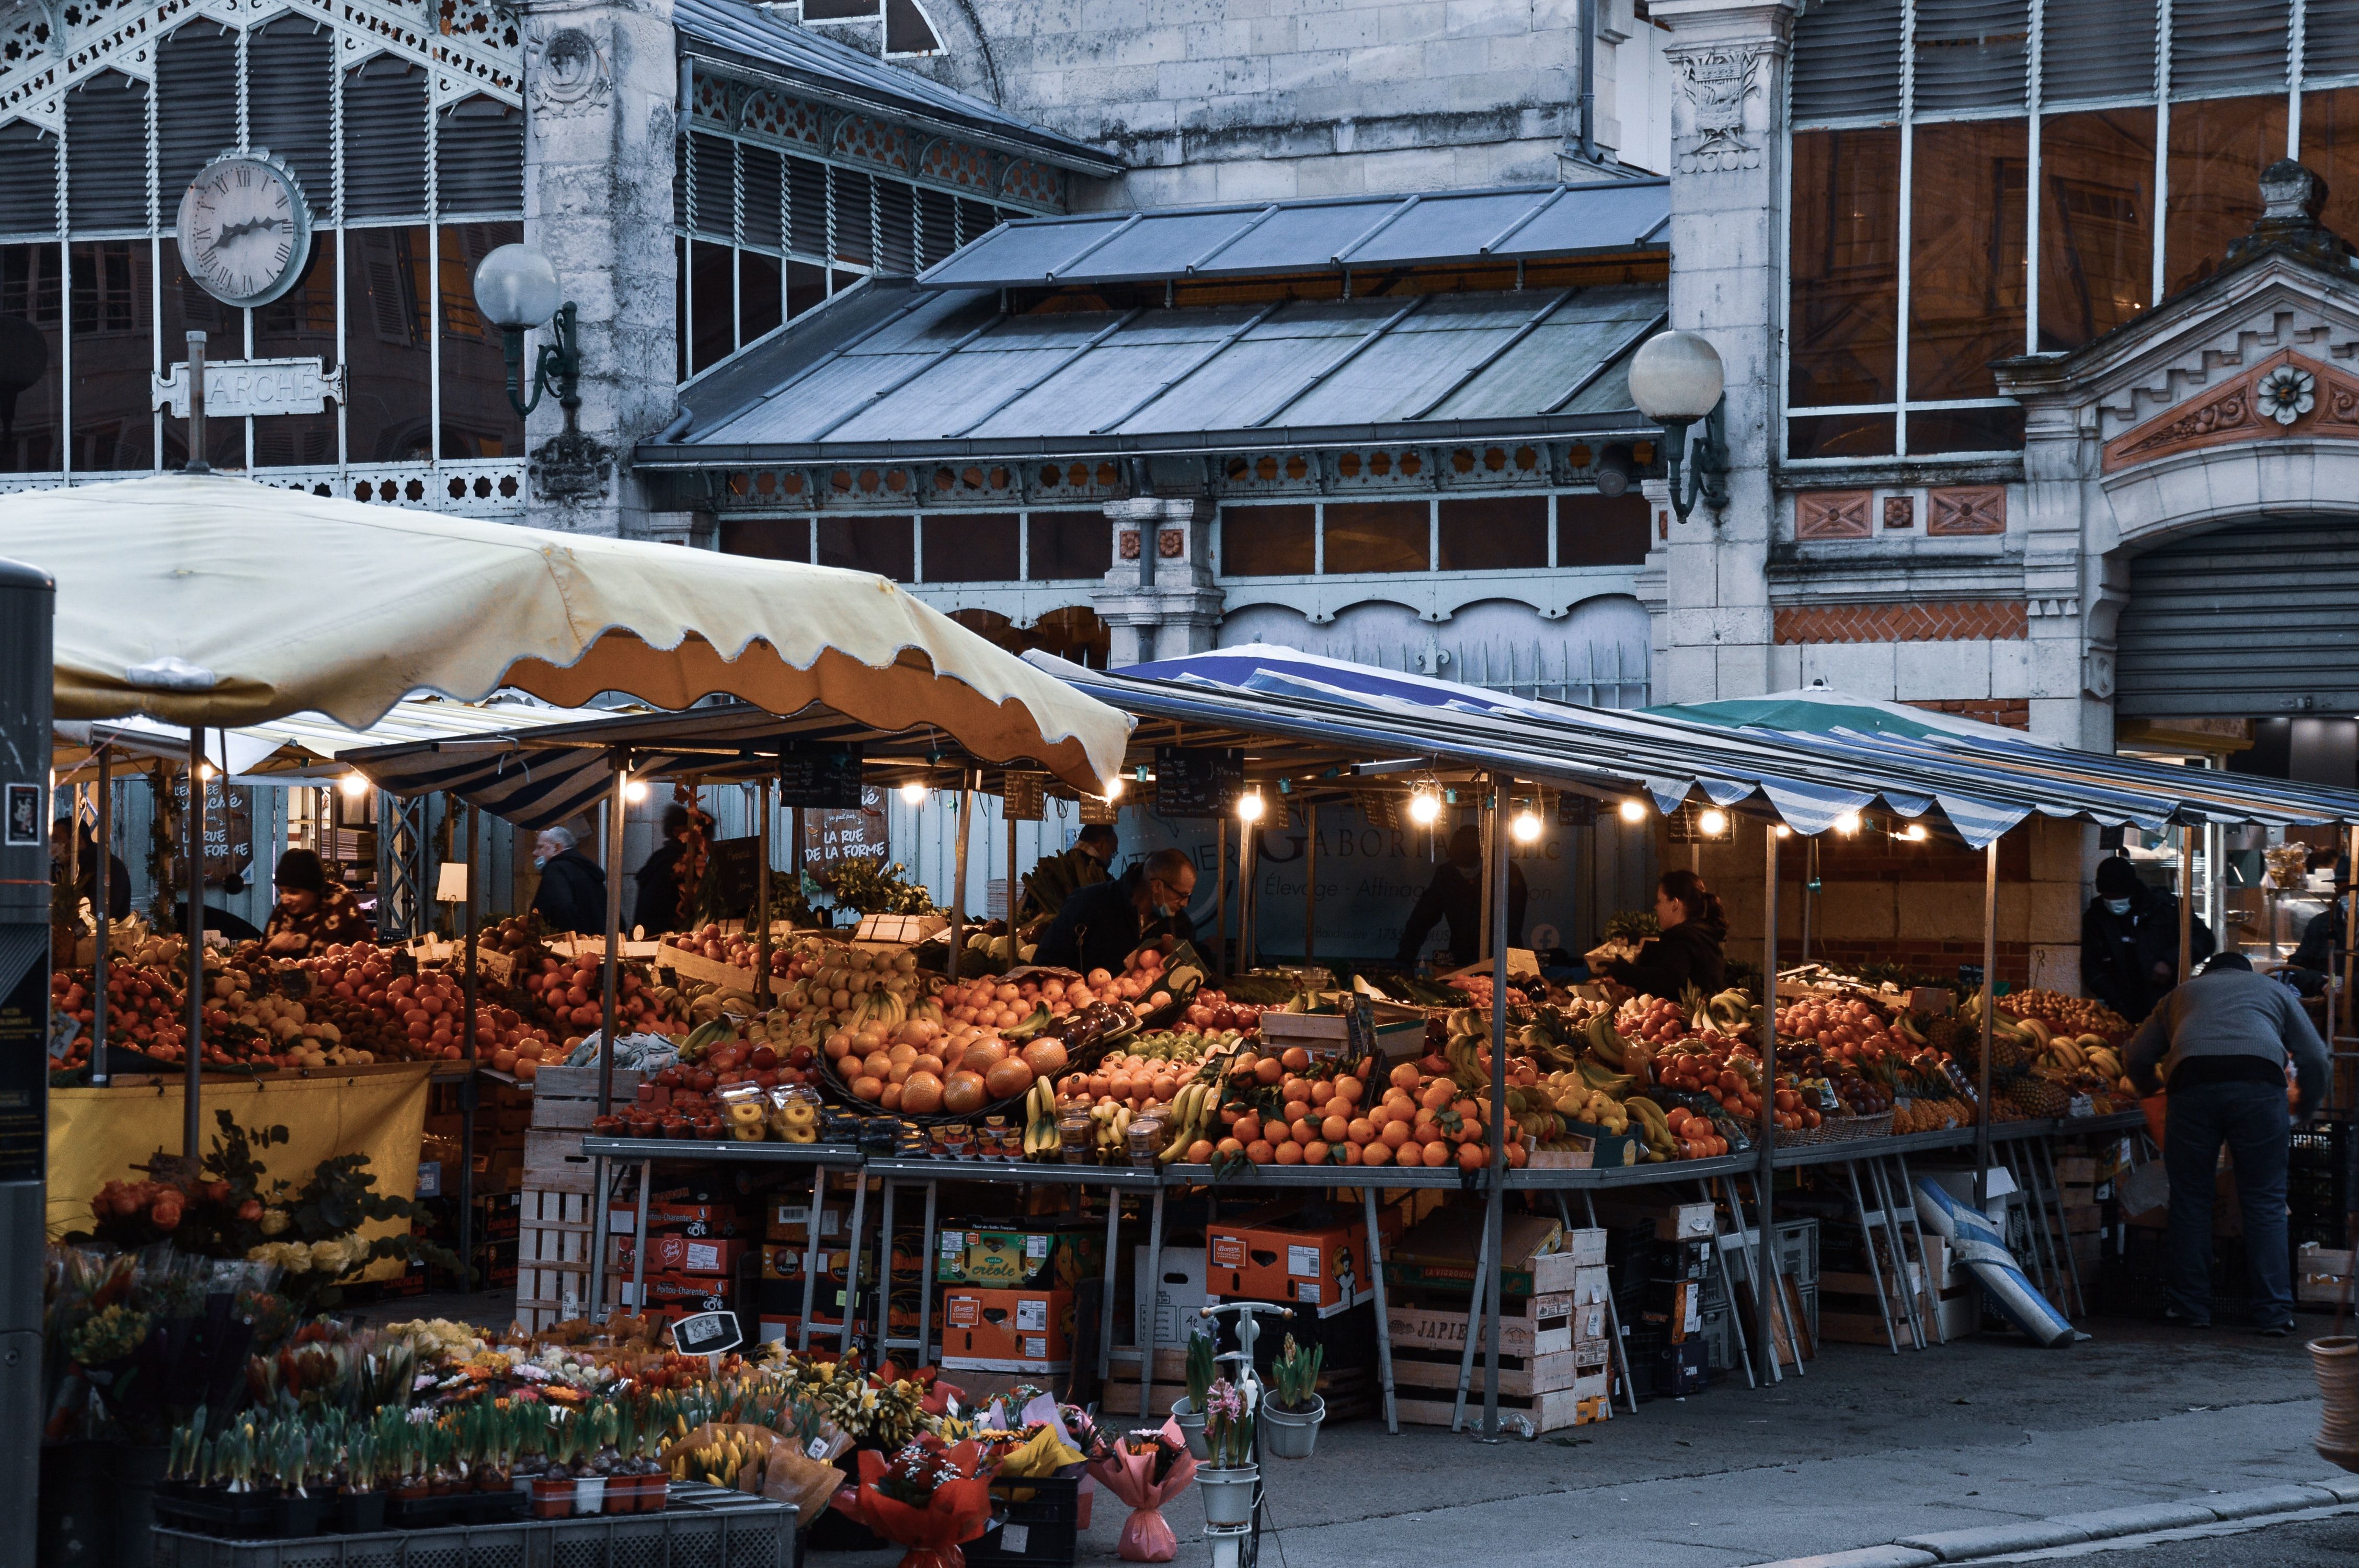 mercado de jade-marchProduce no centro da cidade de La Rochelle